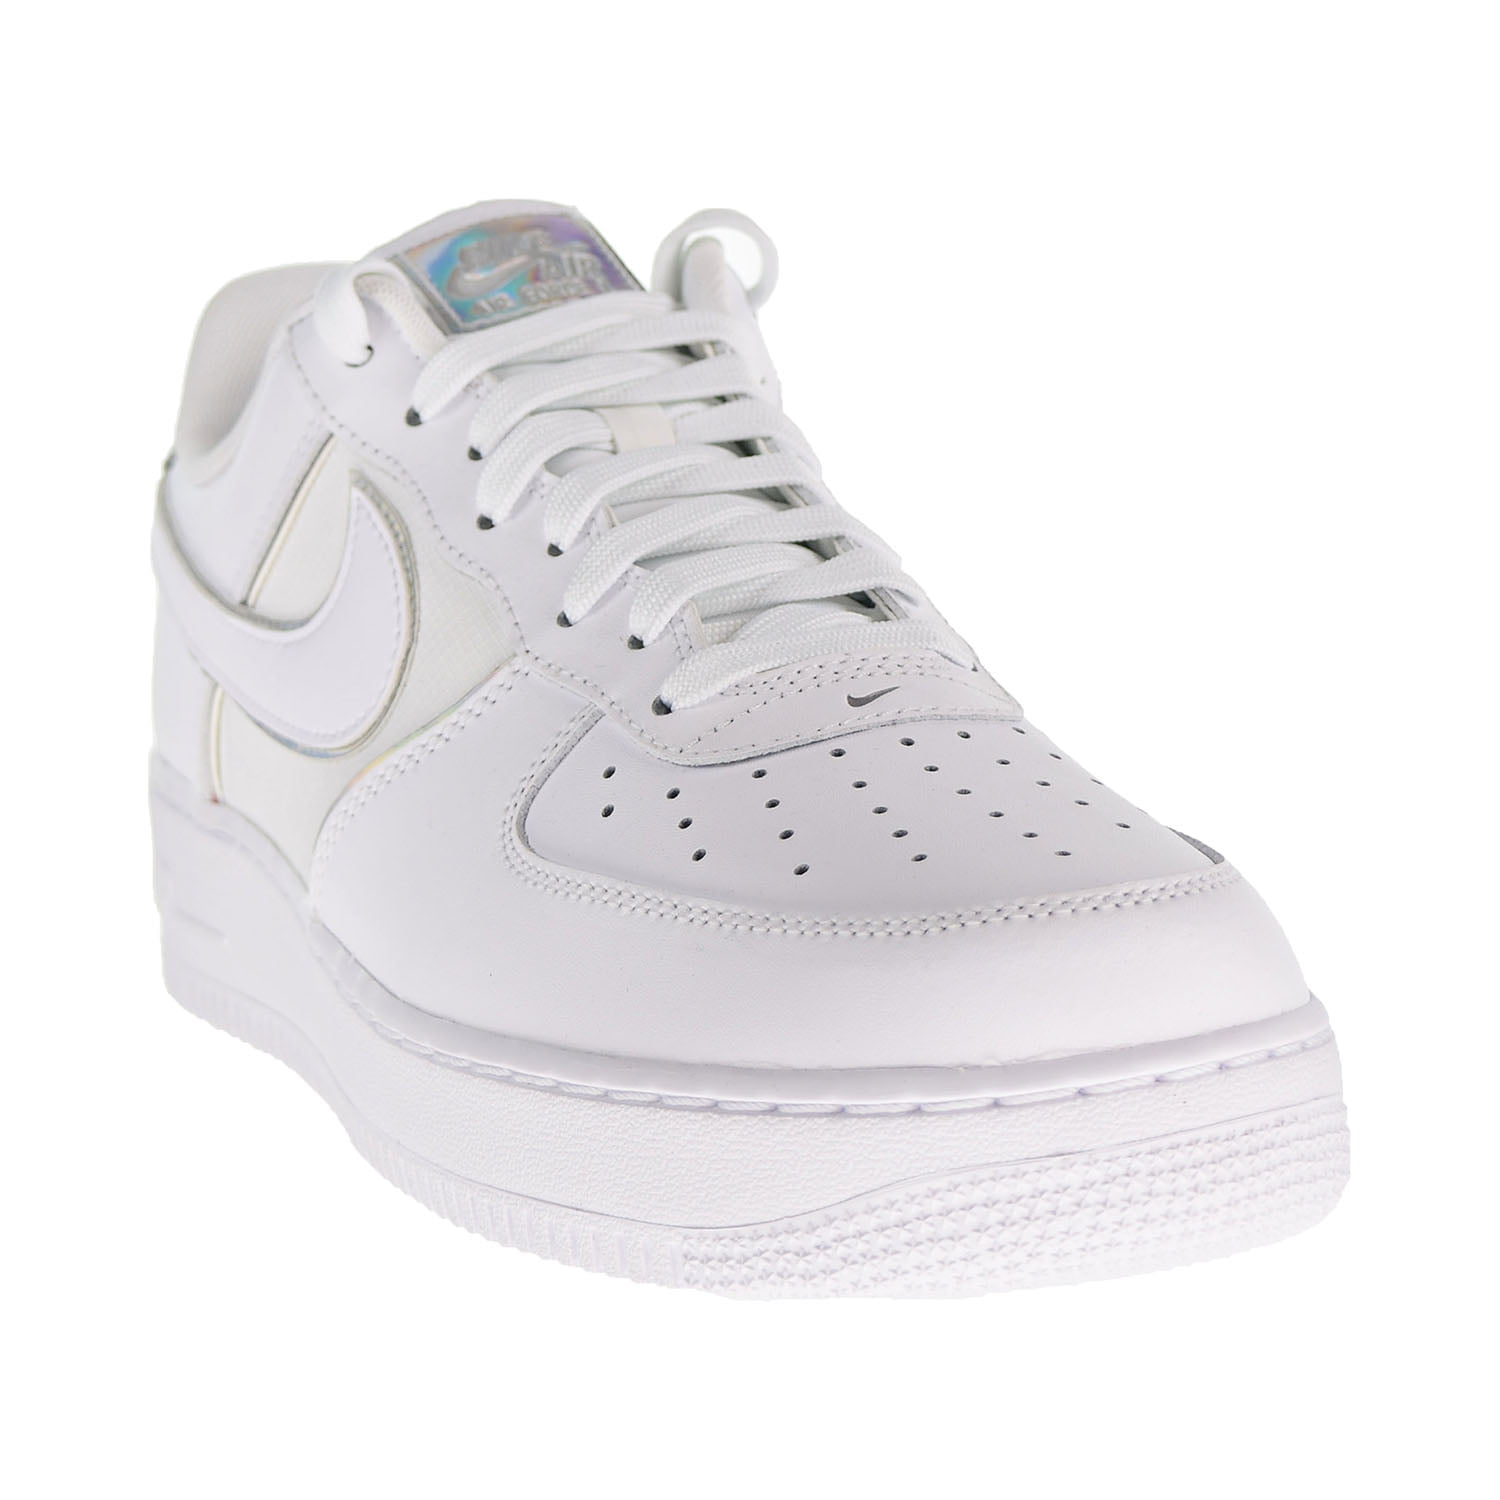 Nike Air Force 1 '07 LV8 4 White AT6147-100 – Men Air Shoes